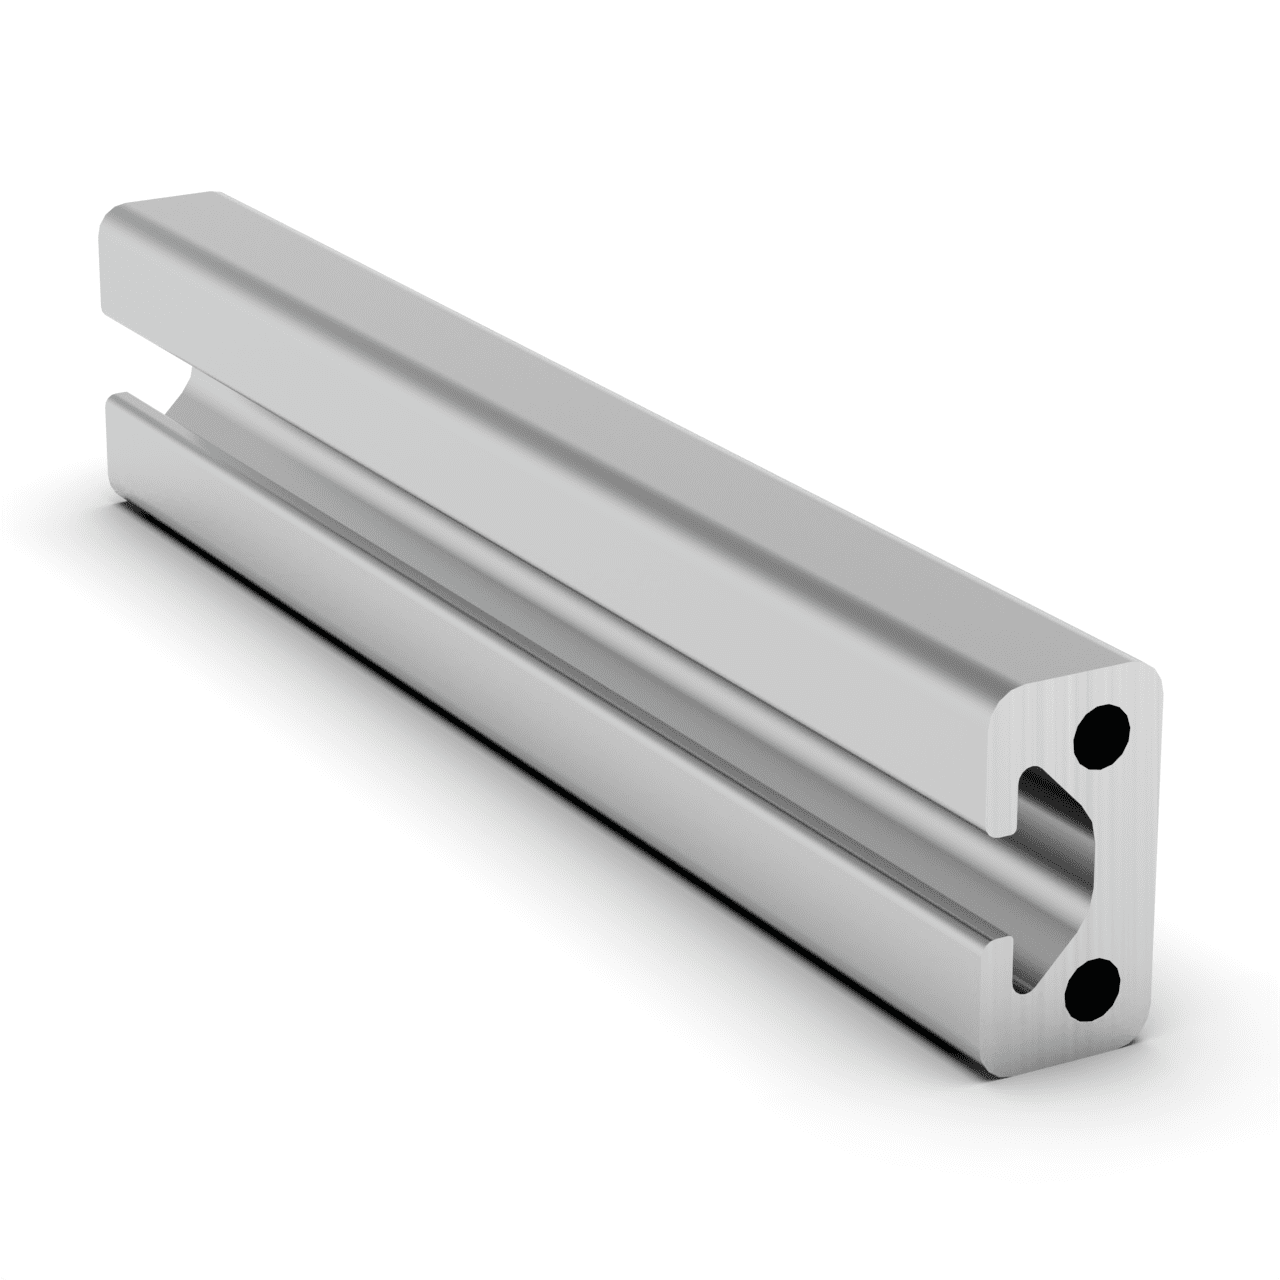 Aluminium slot profiles